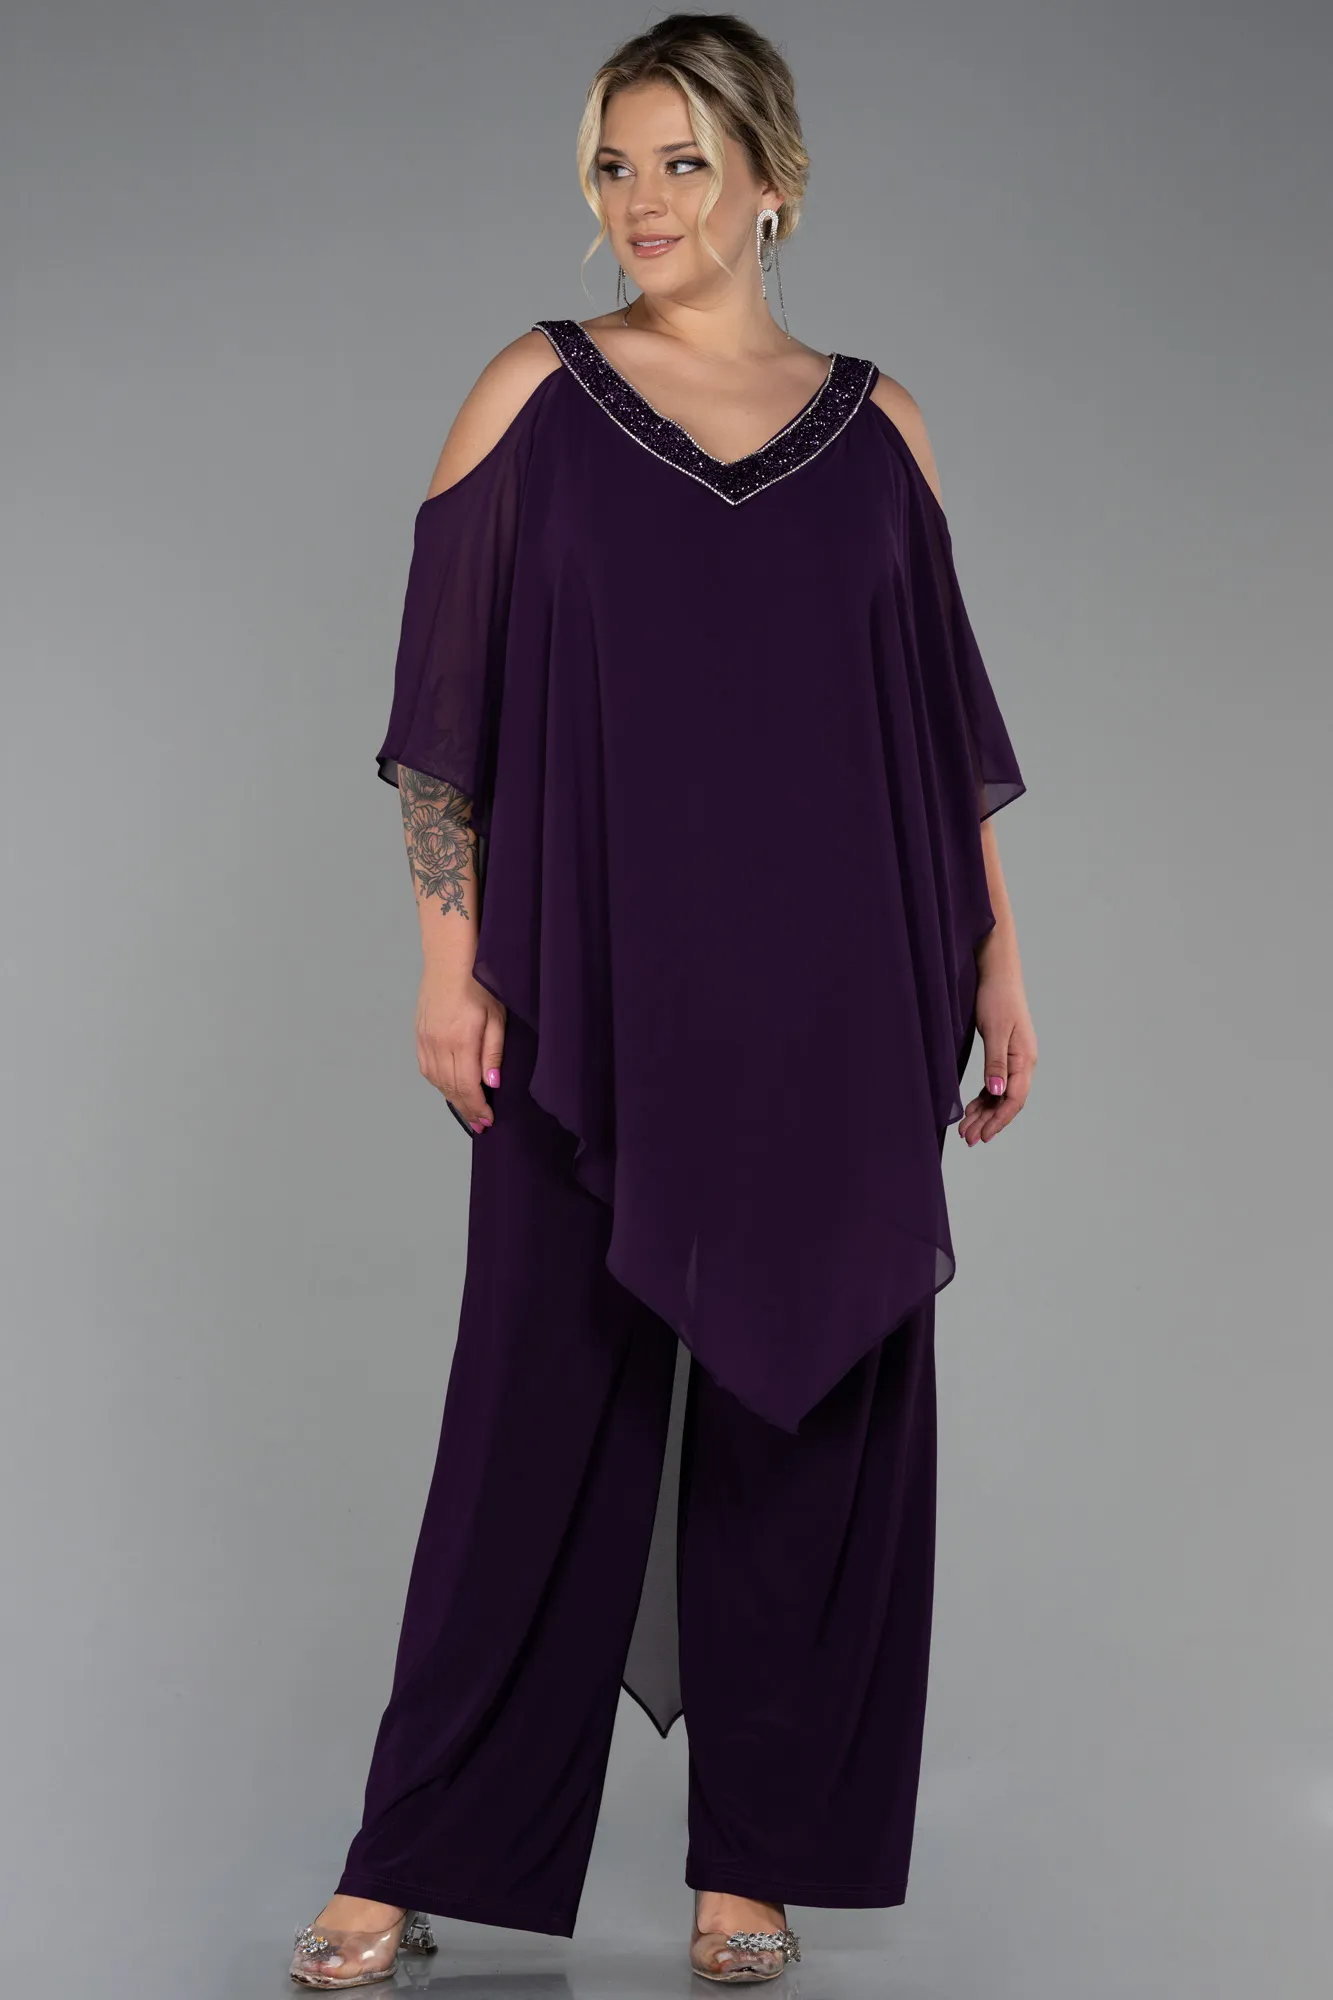 Purple-Chiffon Plus Size Evening Dress ABT096